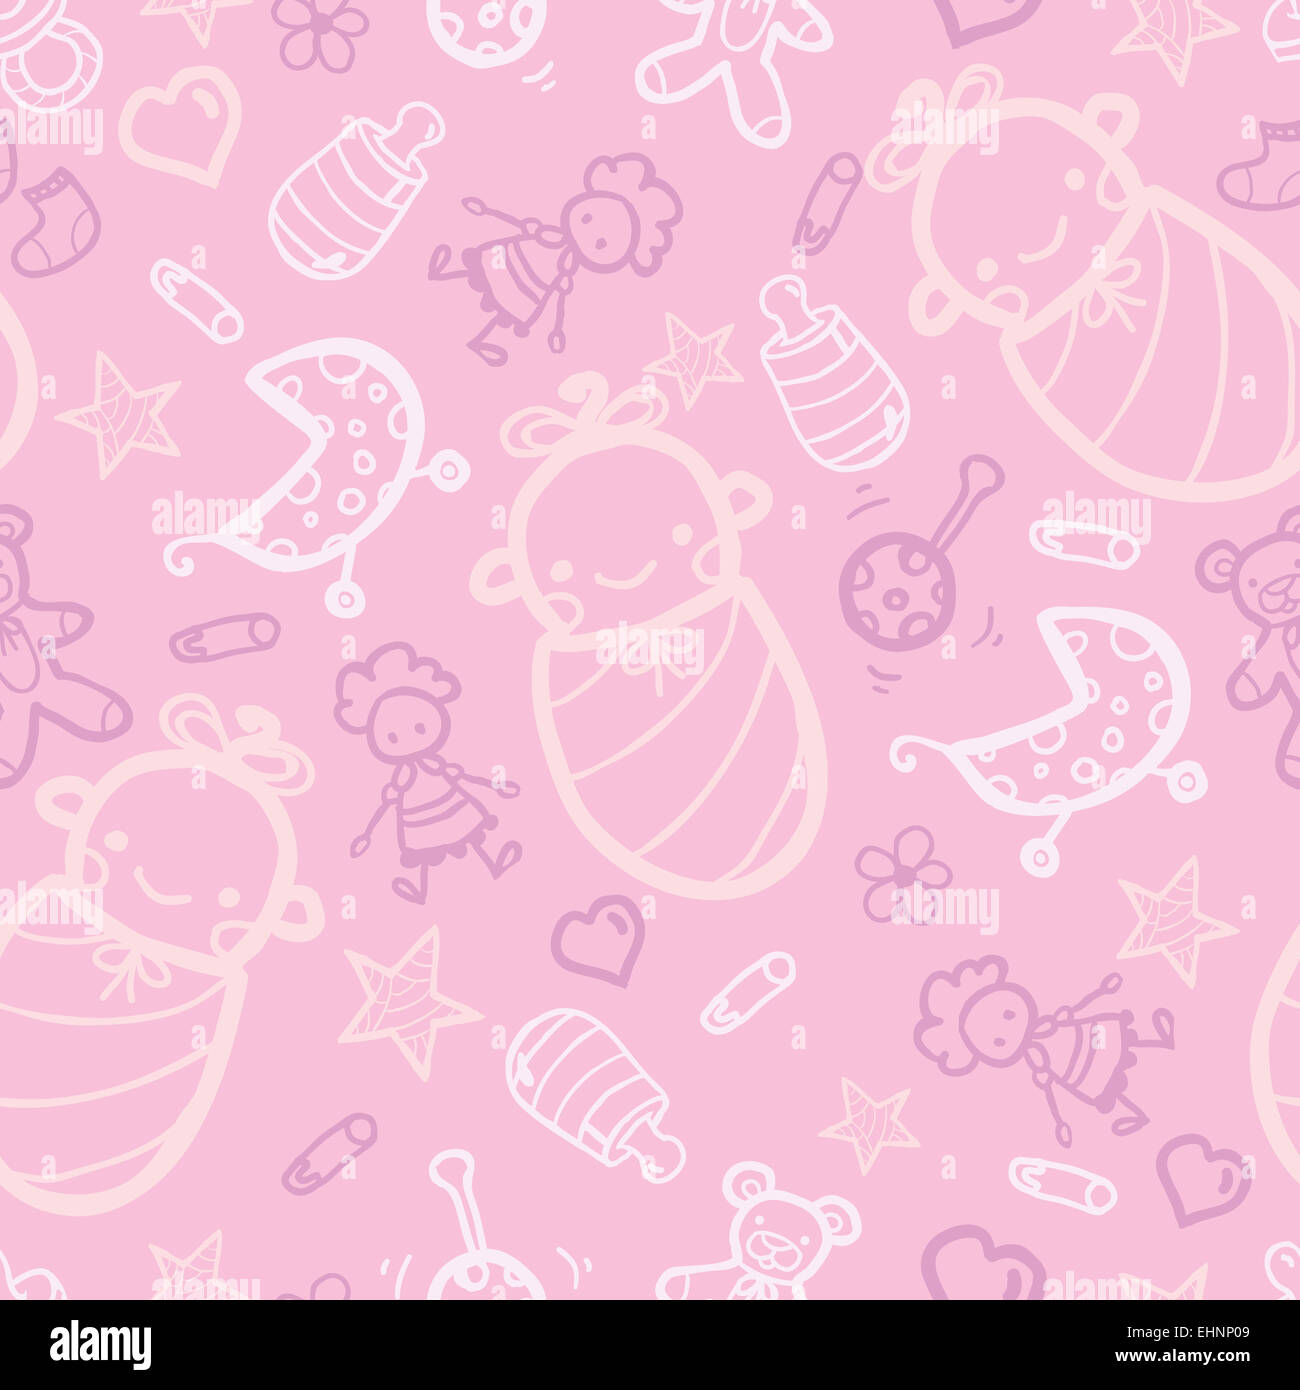 Baby girl pink seamless pattern background Stock Photo - Alamy